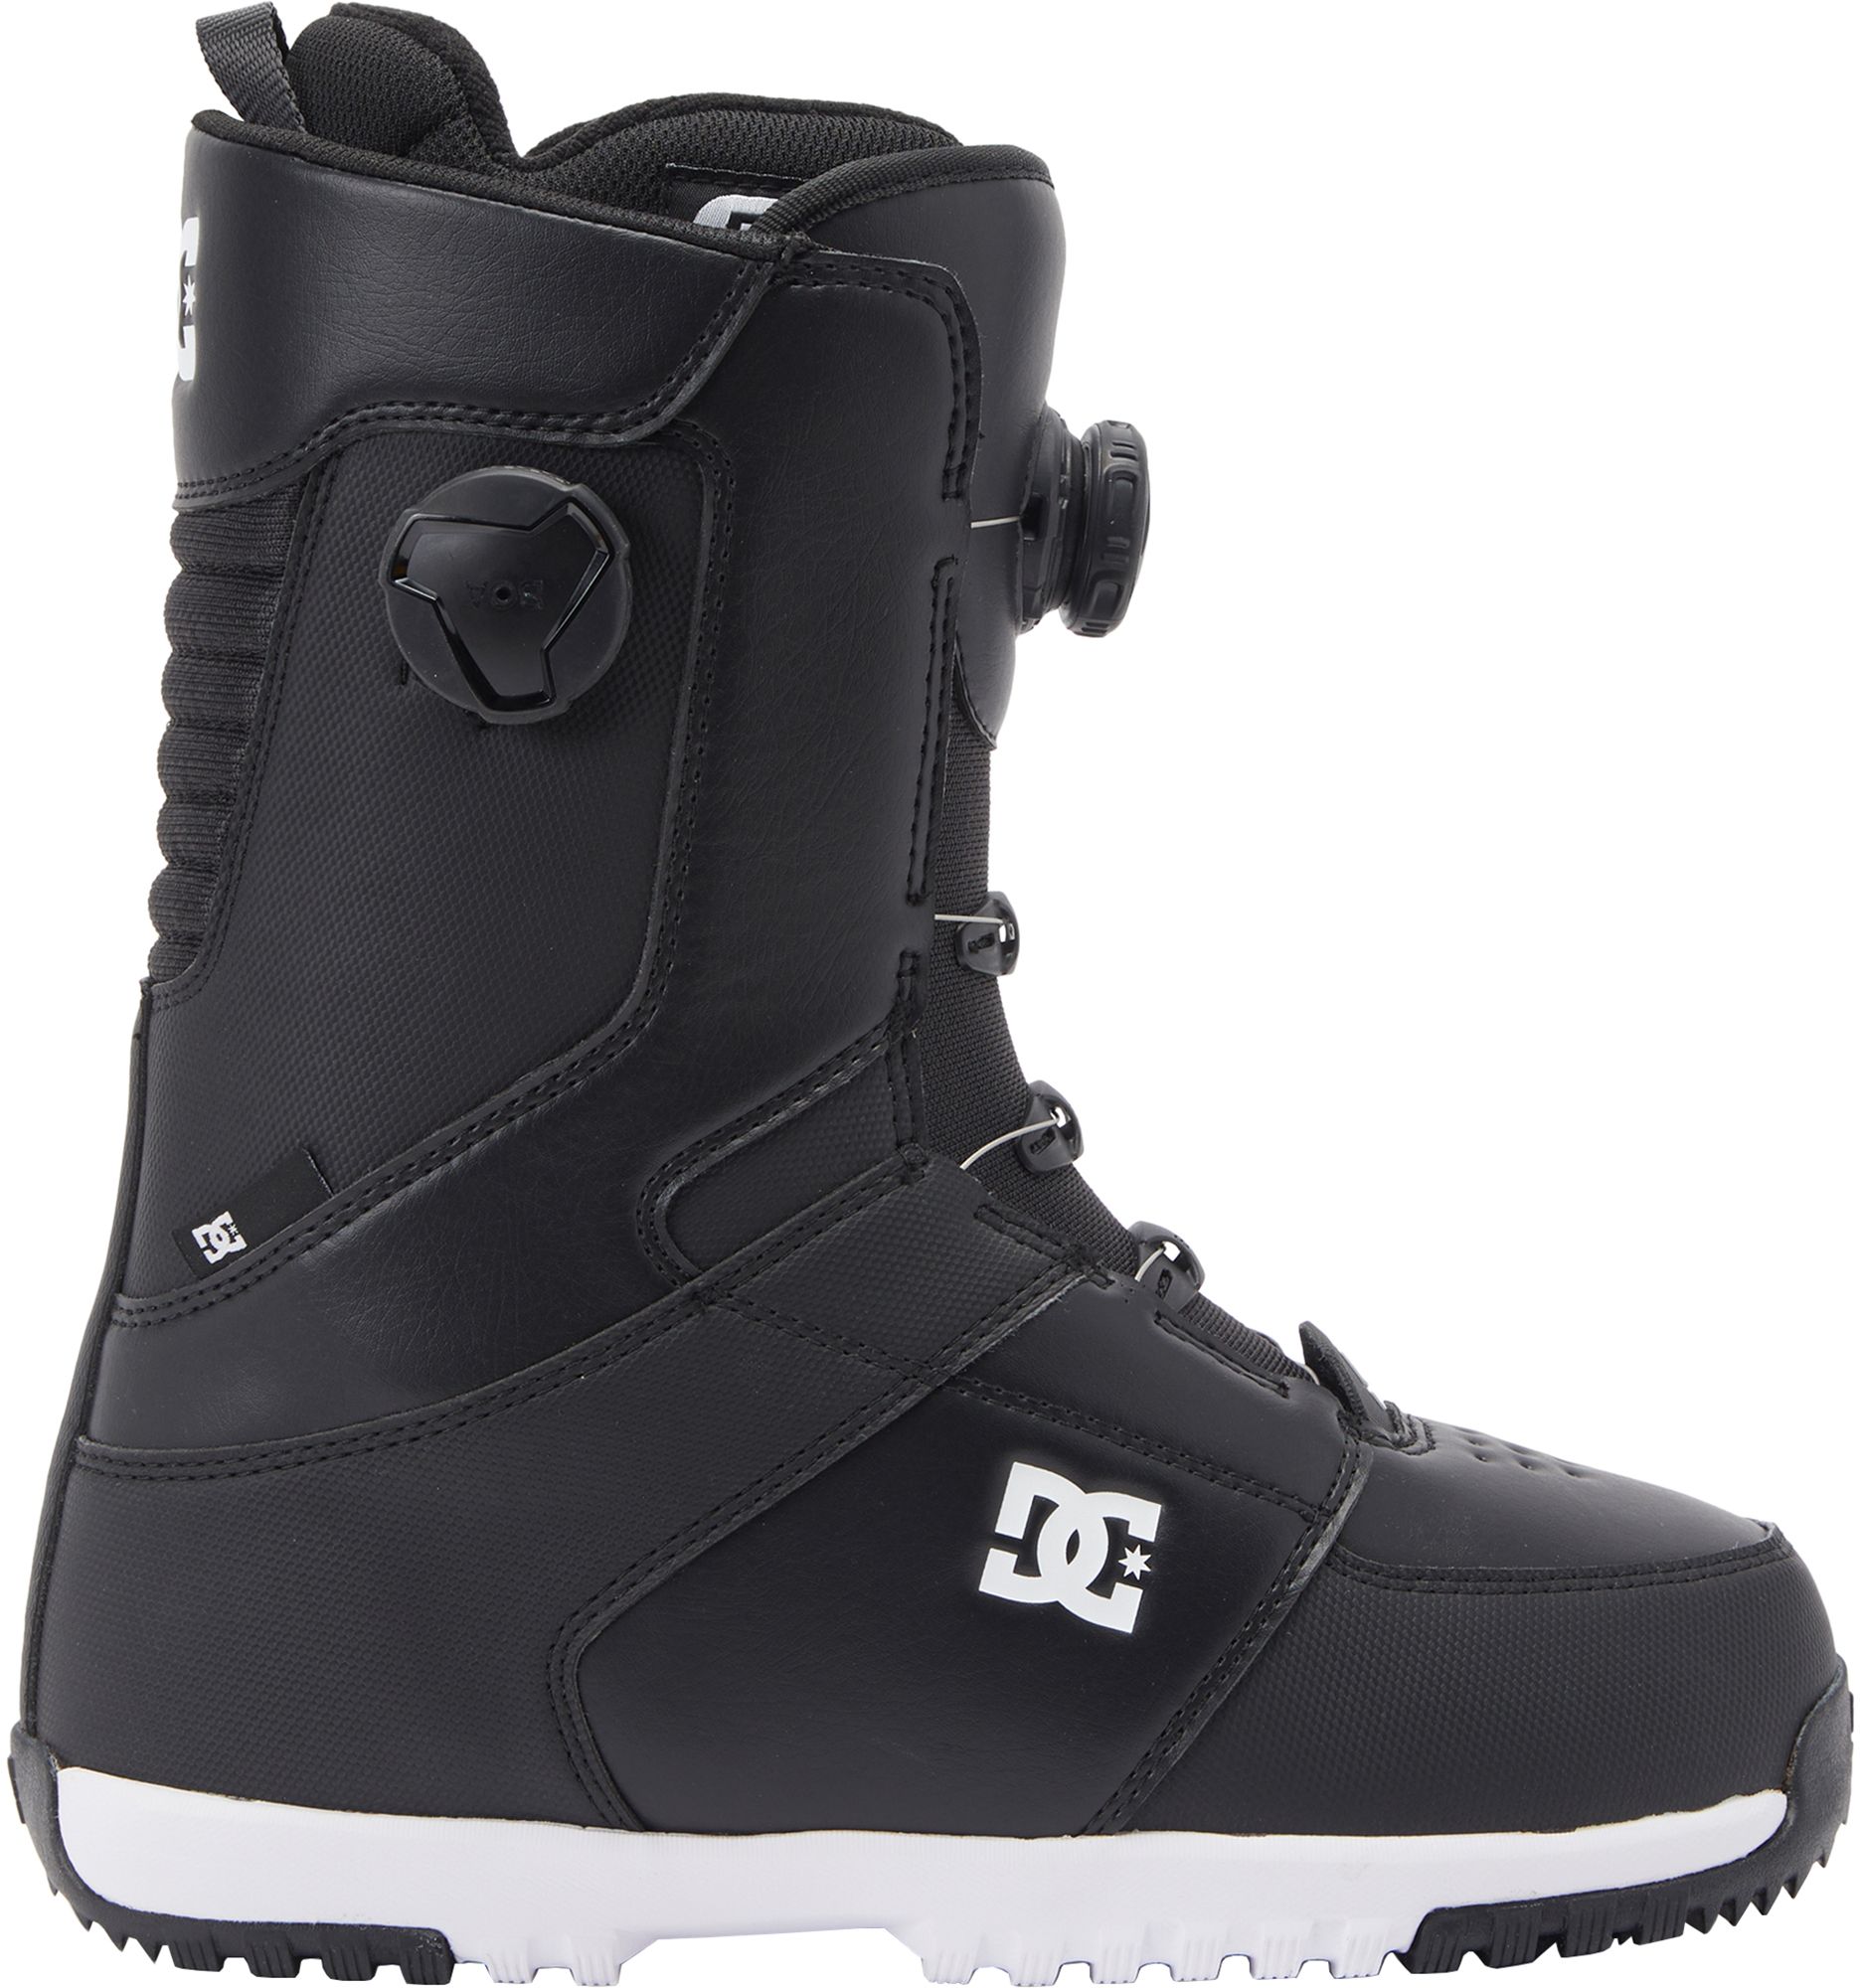 DC Shoes '23 '24 Control BOA Men's Snowboard Boots, Size 12, Black/Black/White